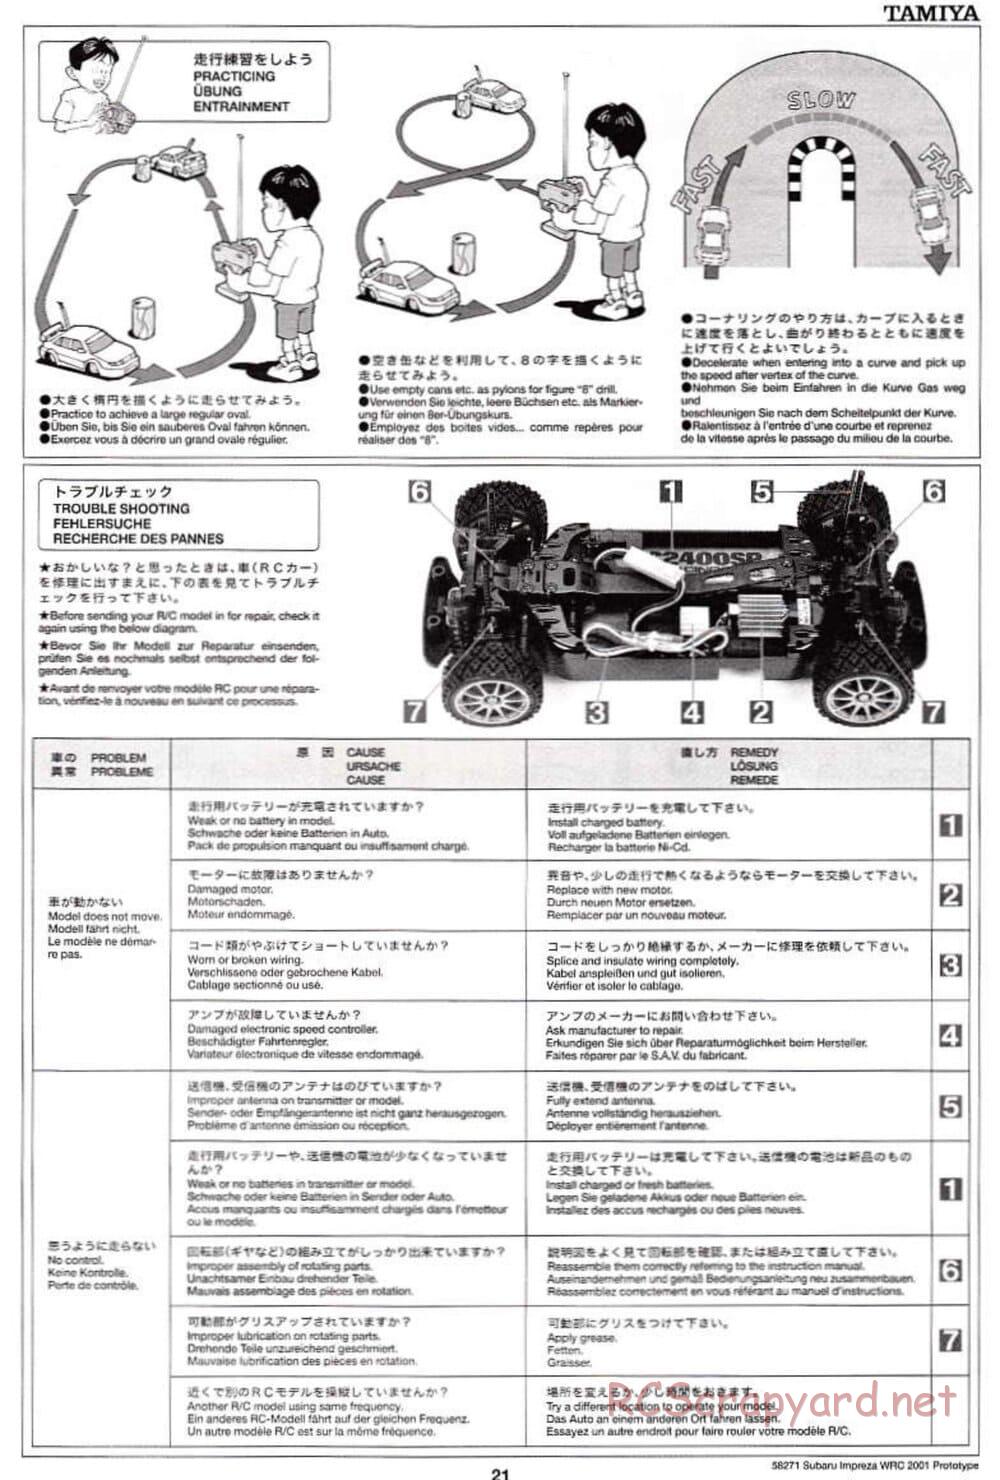 Tamiya - Subaru Impreza WRC 2001 Prototype - TB-01 Chassis - Manual - Page 21